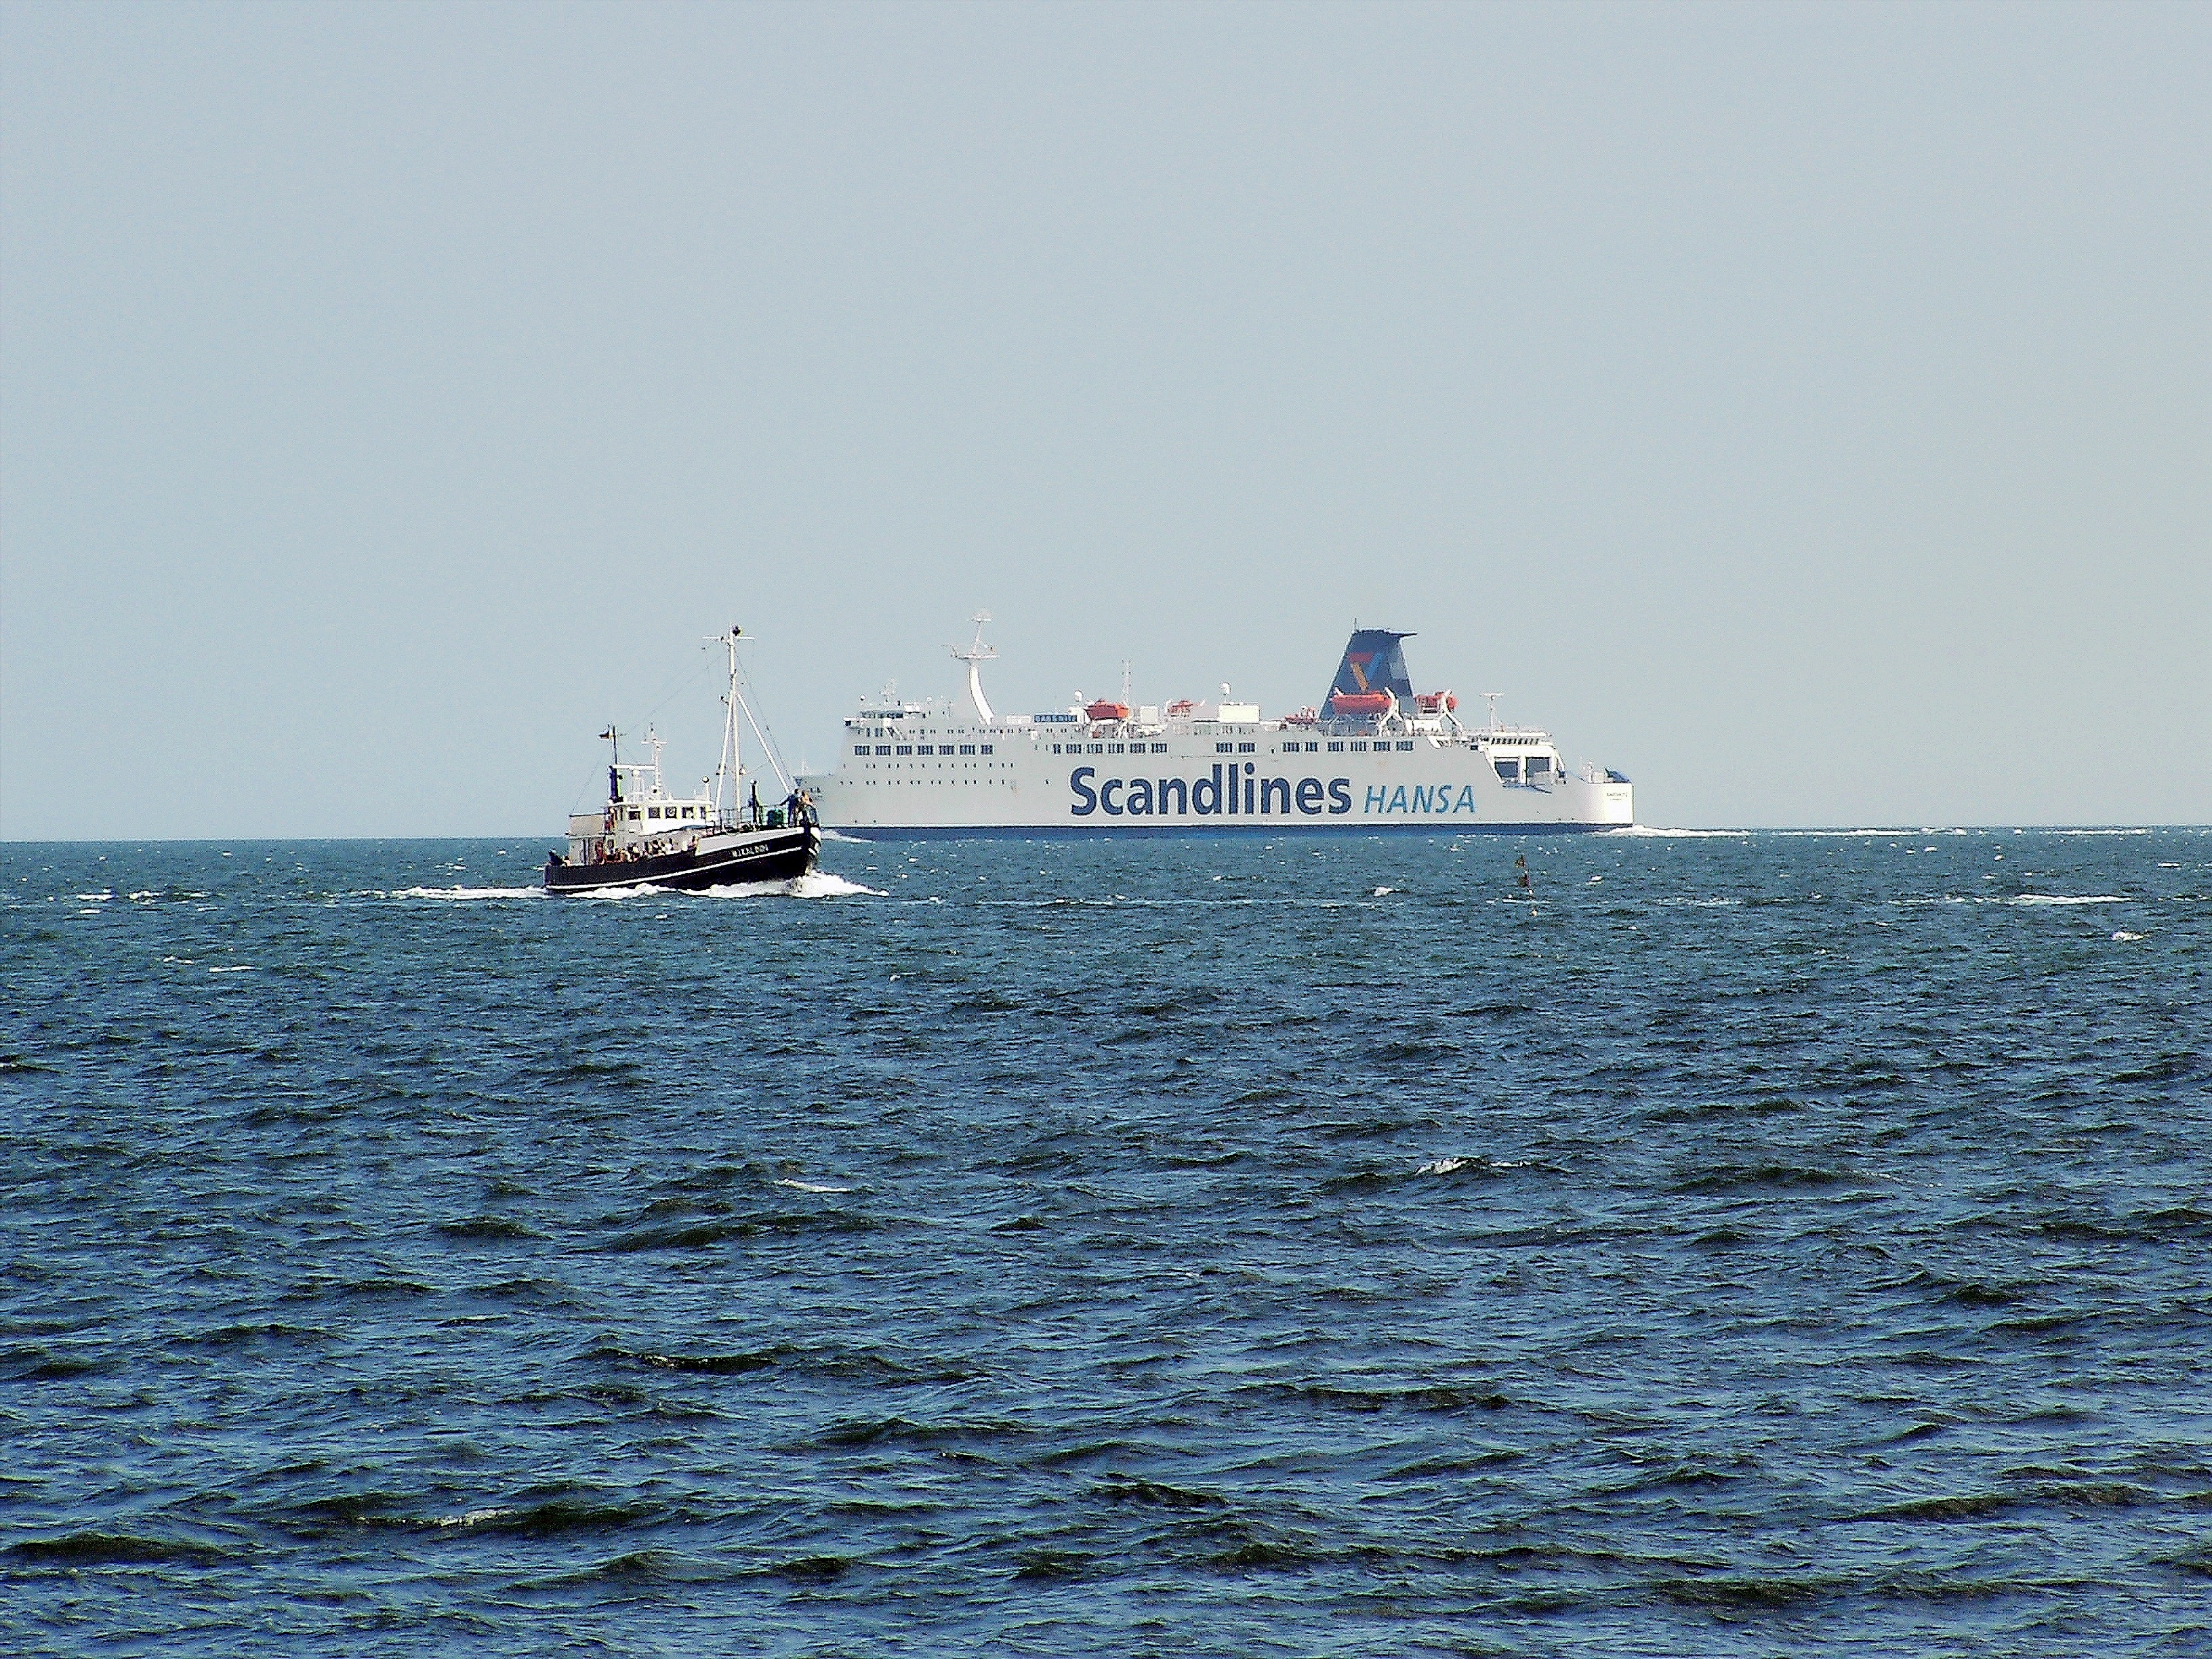 scandlines hansa ship on ocean during daytime